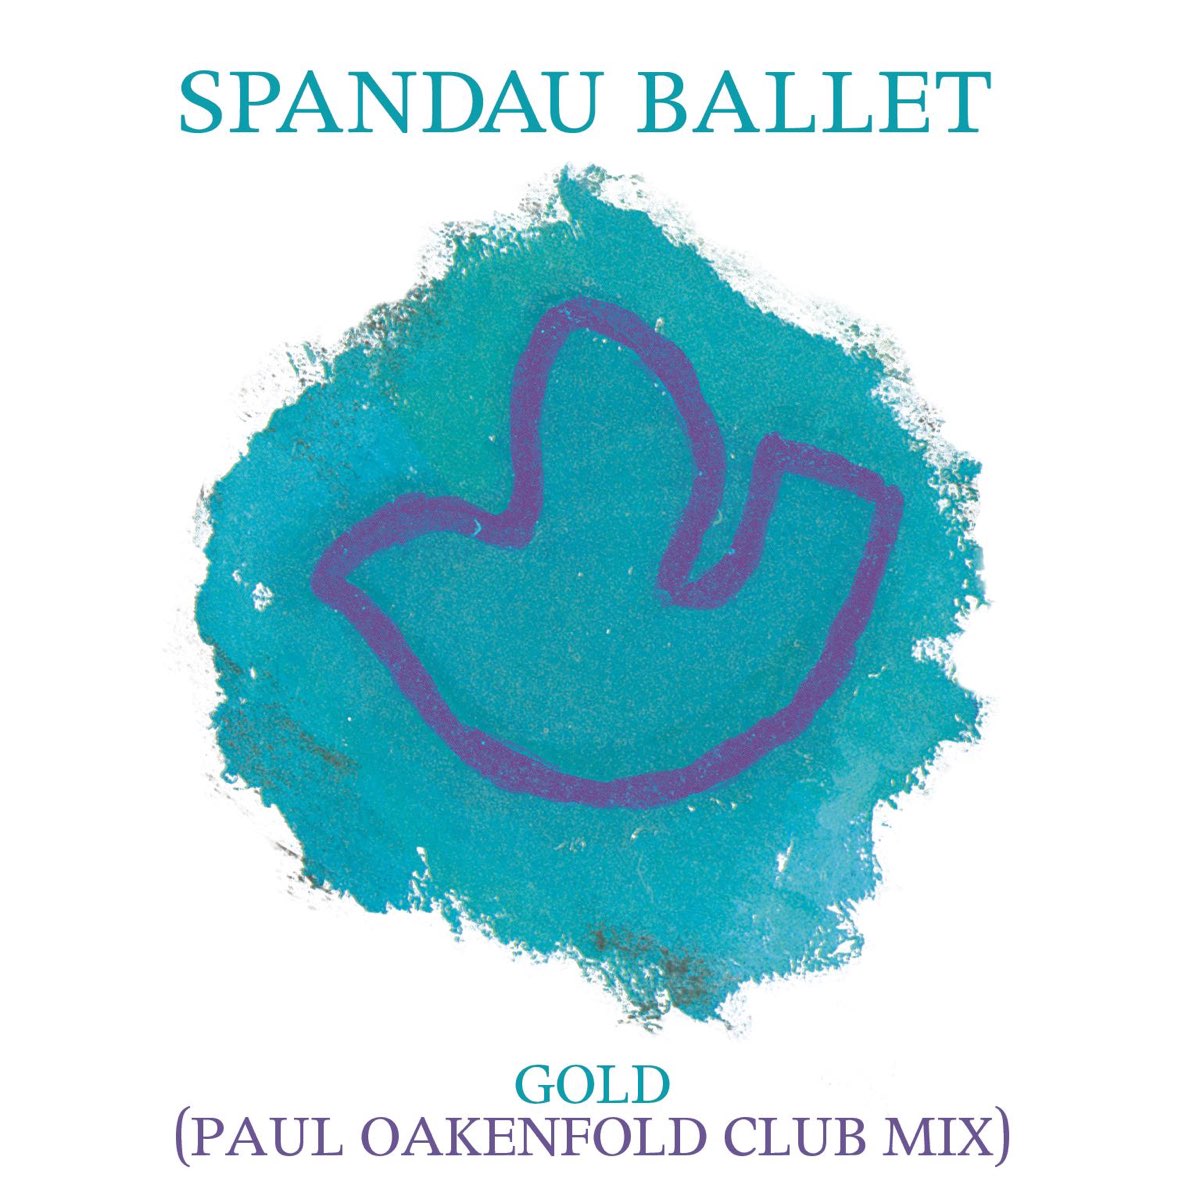 Gold (Paul Oakenfold Club Mix) - Single by Spandau Ballet on Apple Music